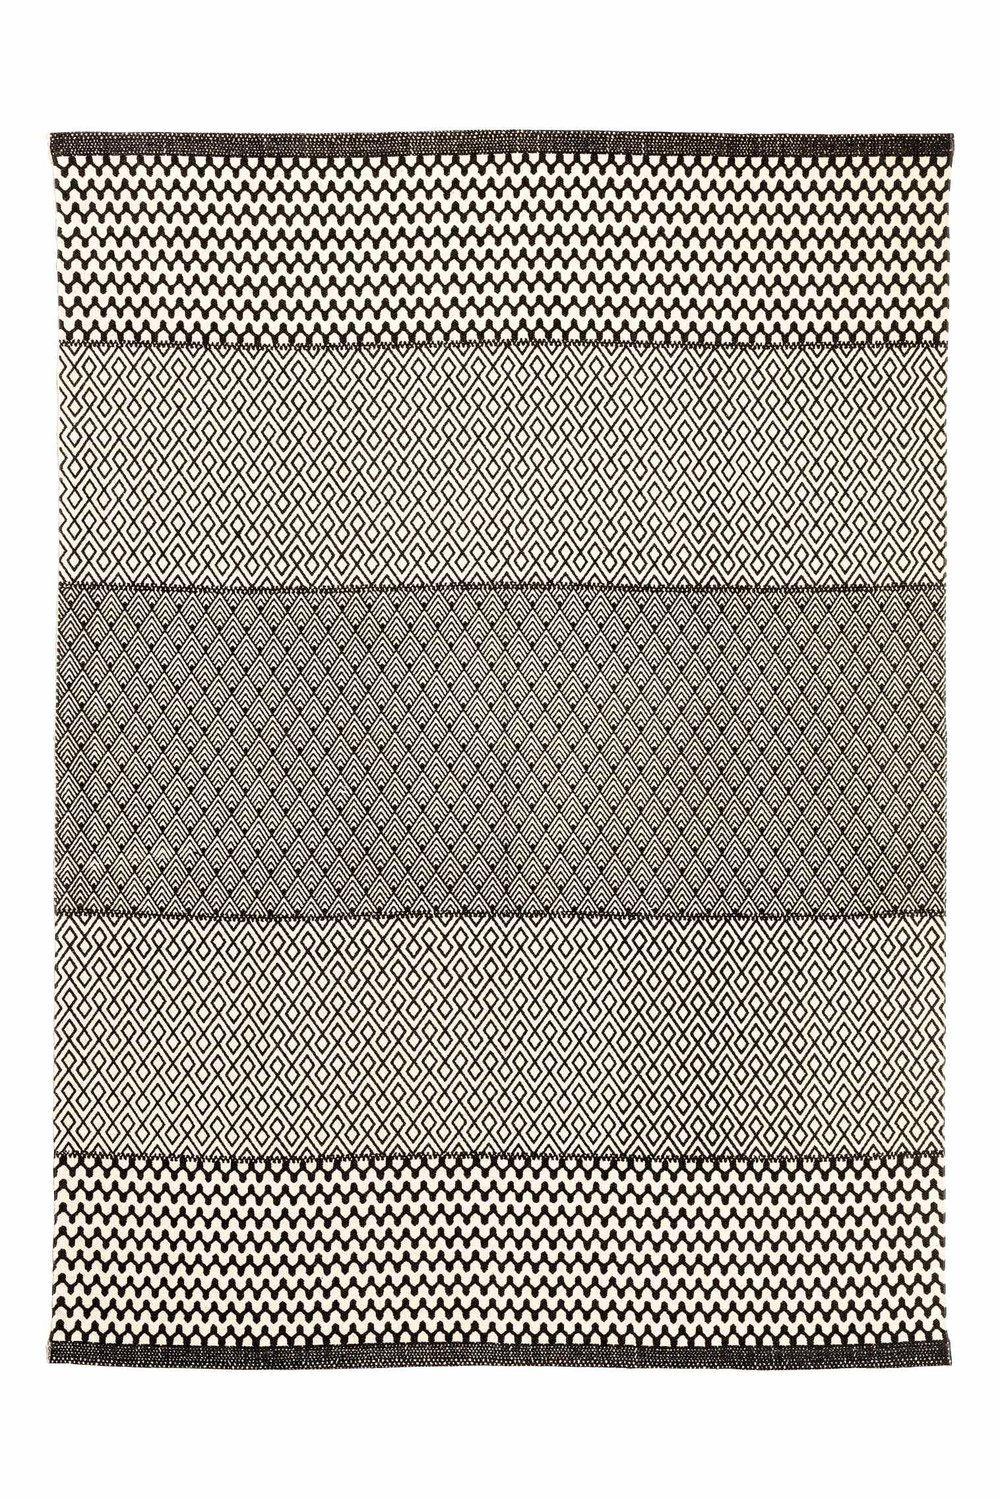 Cotton patterned rug, $99